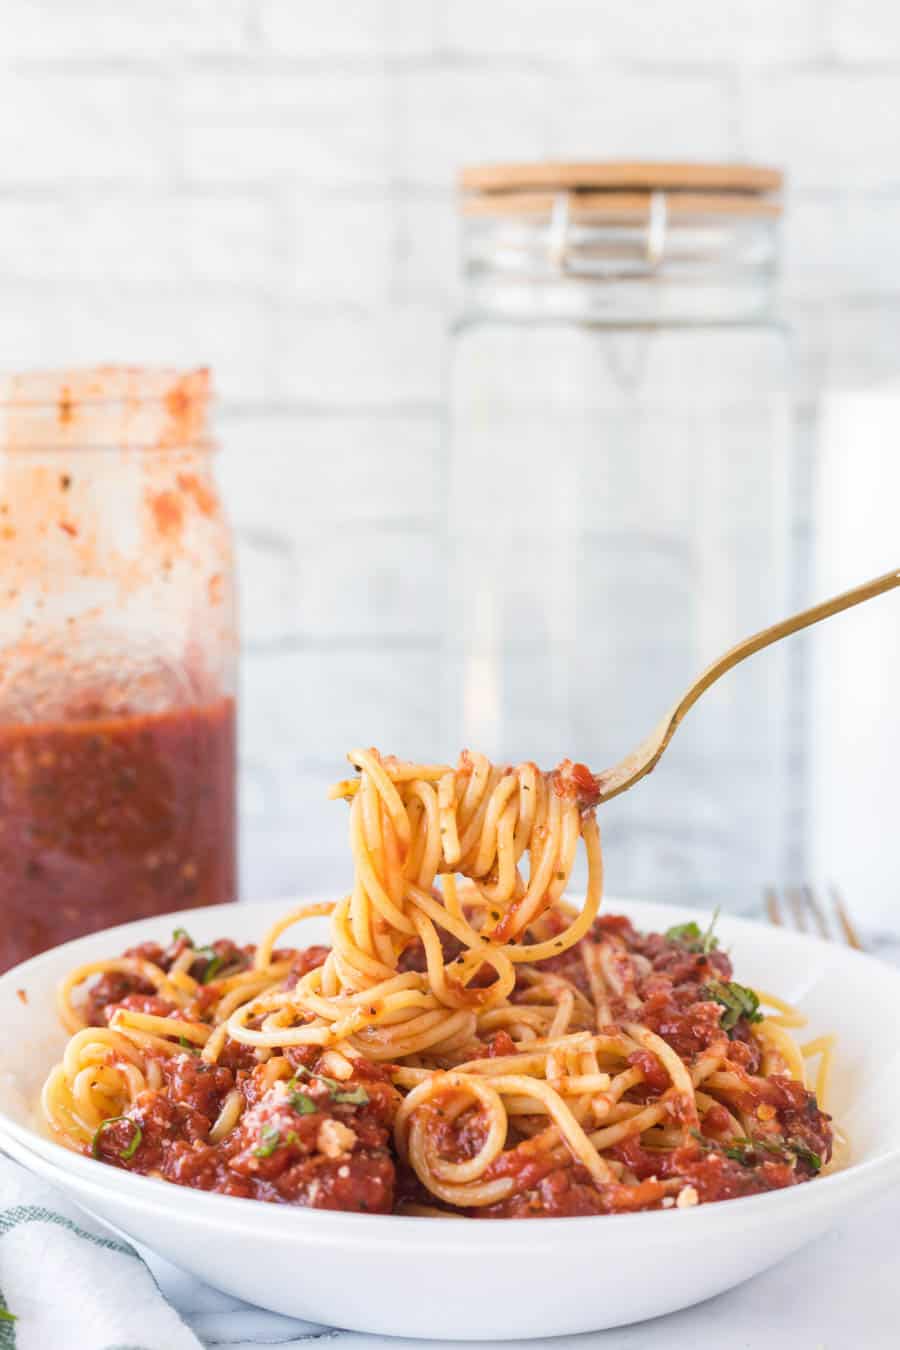 arrabbiata sauce over pasta on a white plate